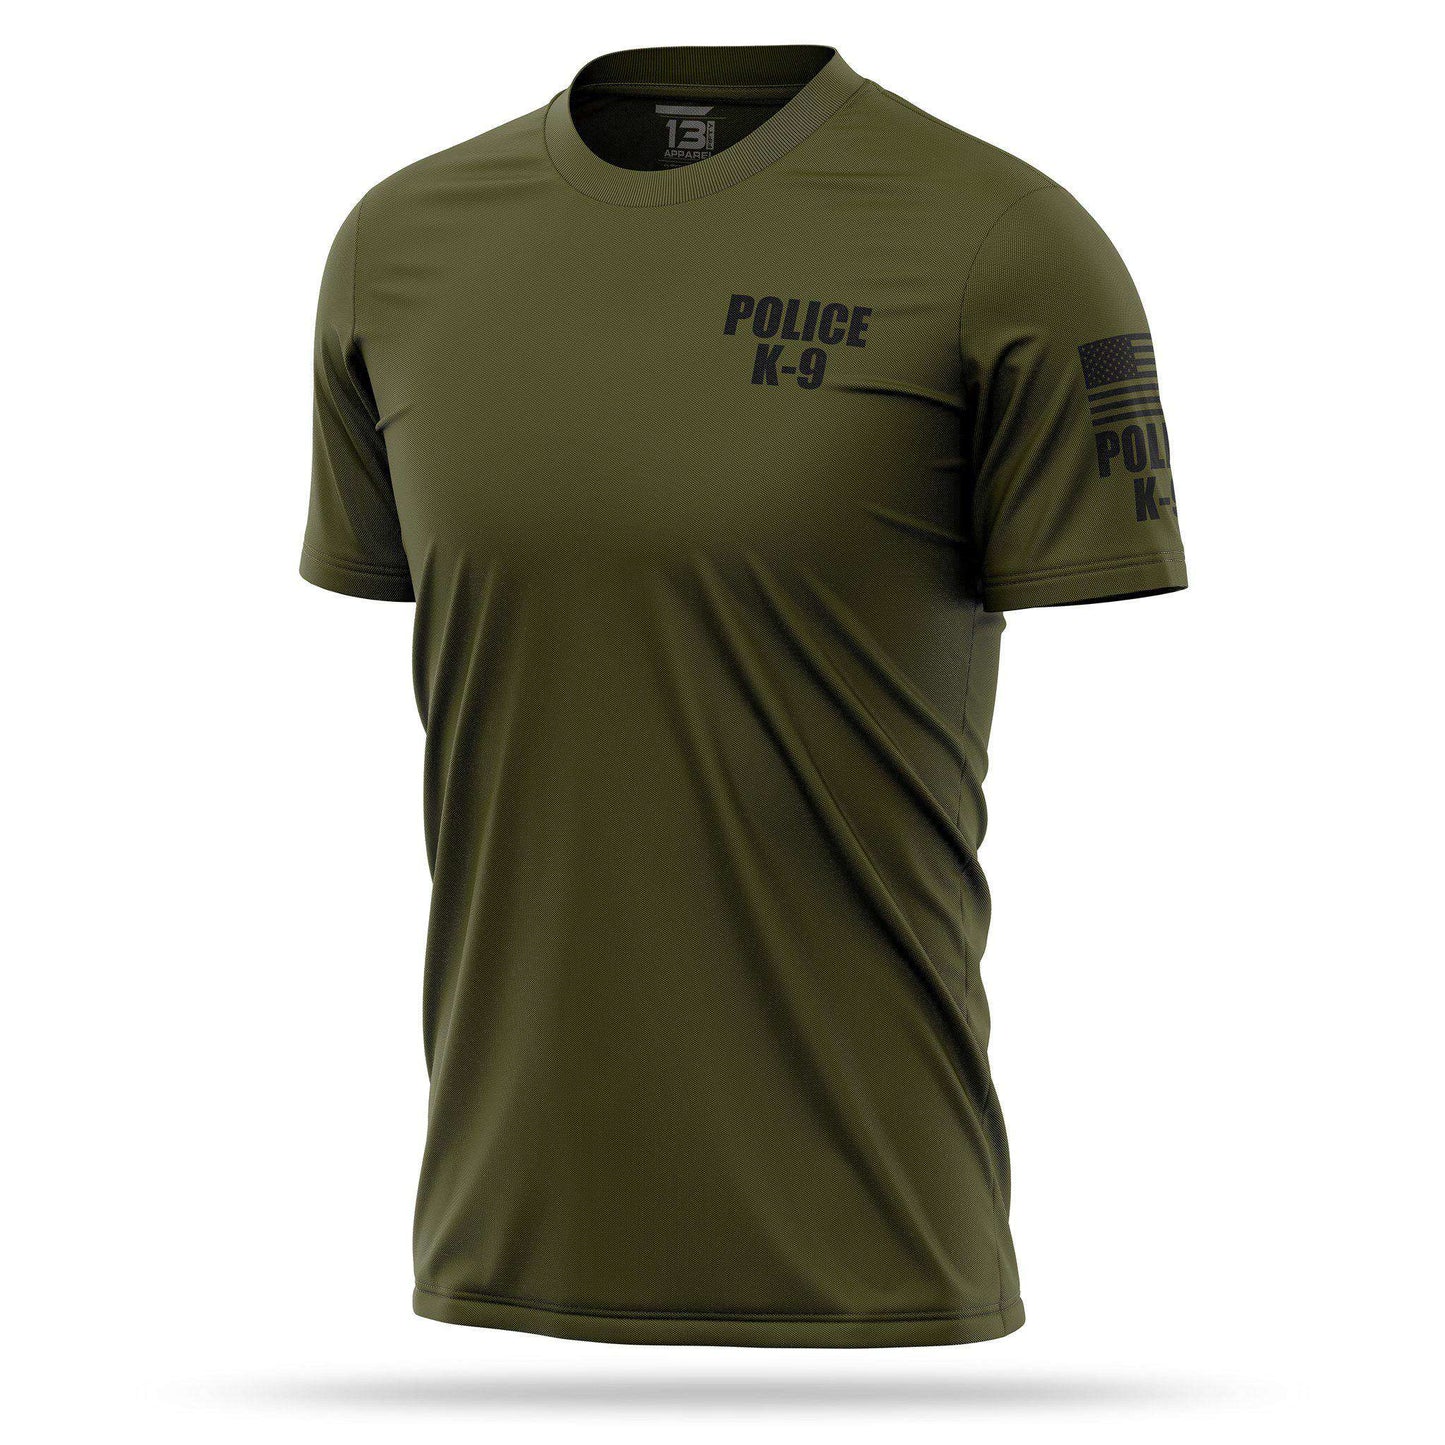 [POLICE K9] Men's Performance Shirt [GRN/BLK]-13 Fifty Apparel